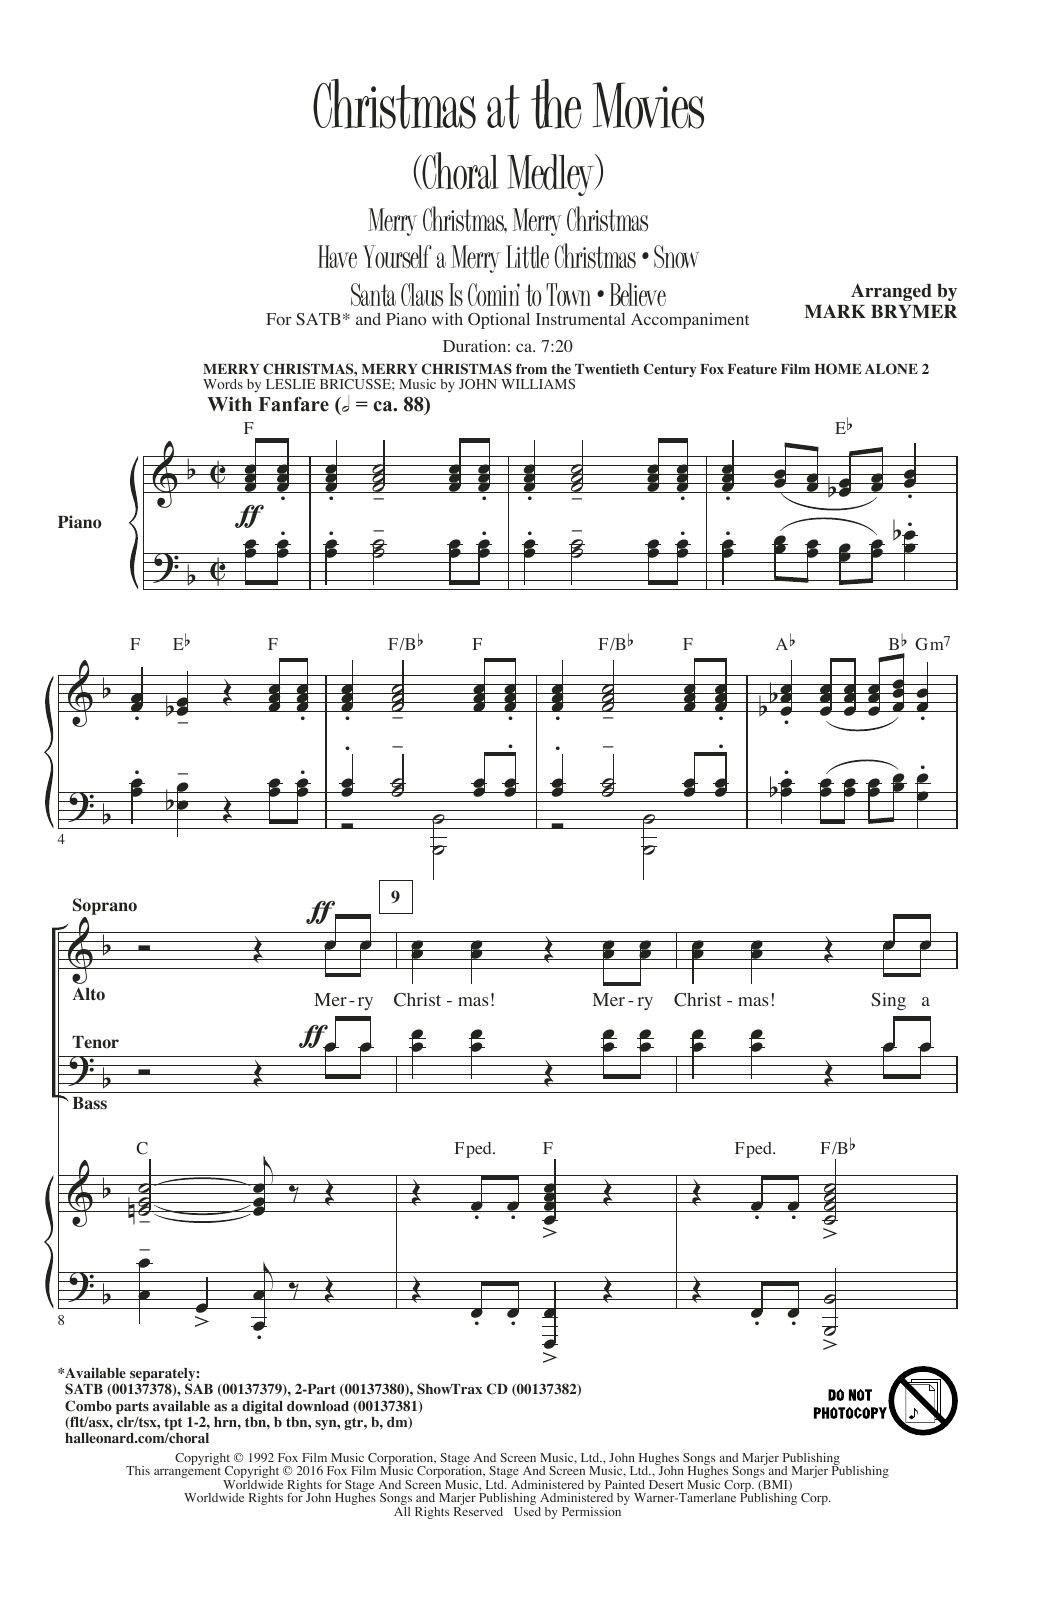 Download Mark Brymer Christmas At The Movies (Choral Medley) Sheet Music